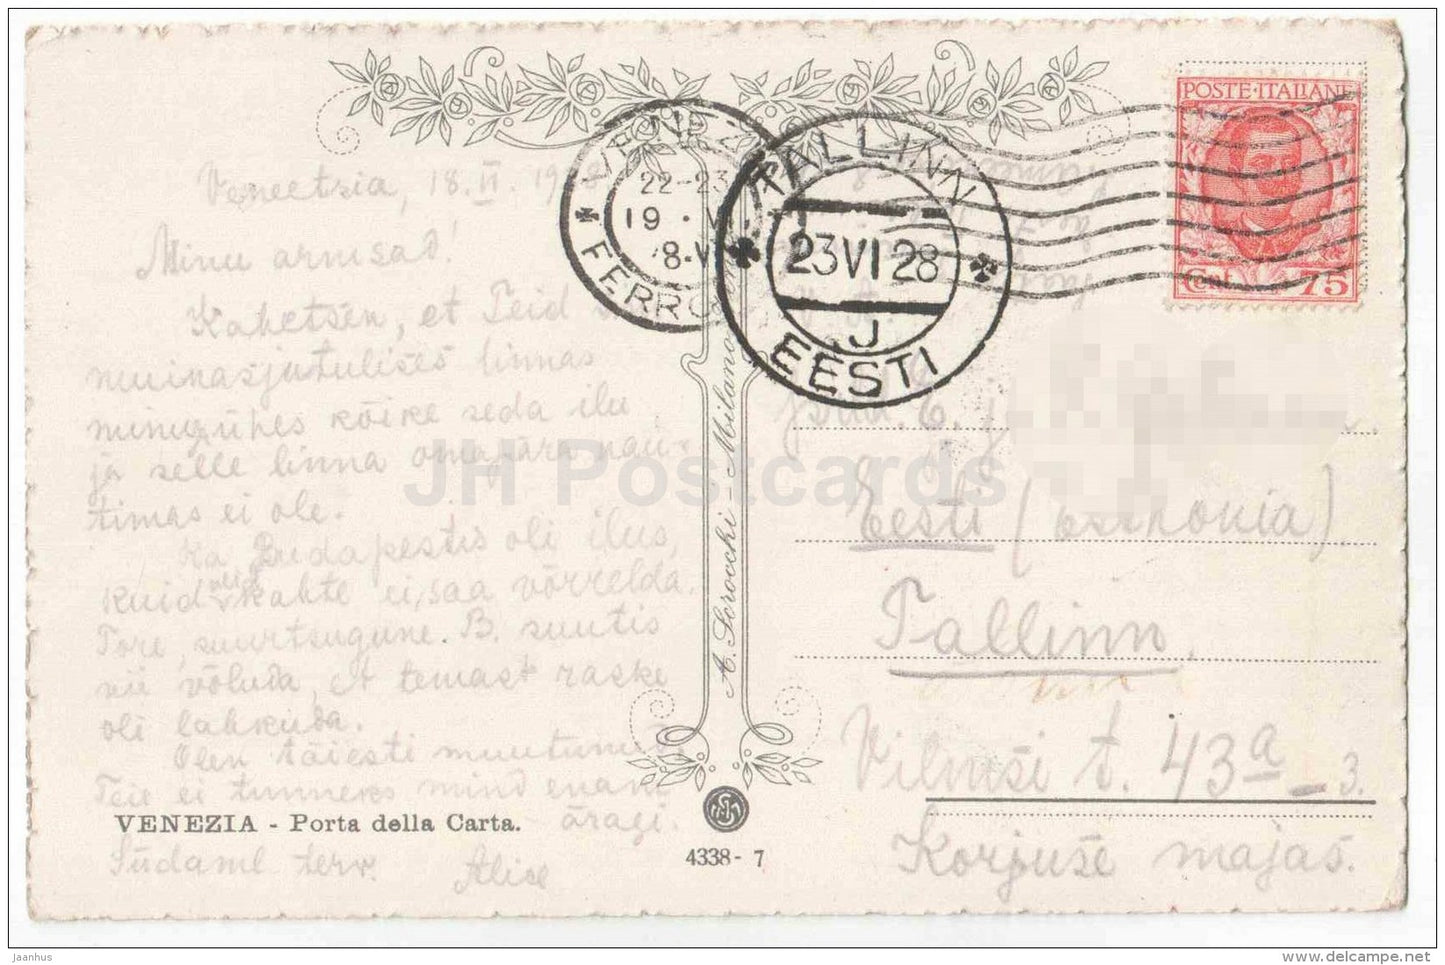 Porta della Carta - illustration - Venezia - Venice - 4338 - Italy - sent from Italy Venezia to Estonia Tallinn 1928 - JH Postcards